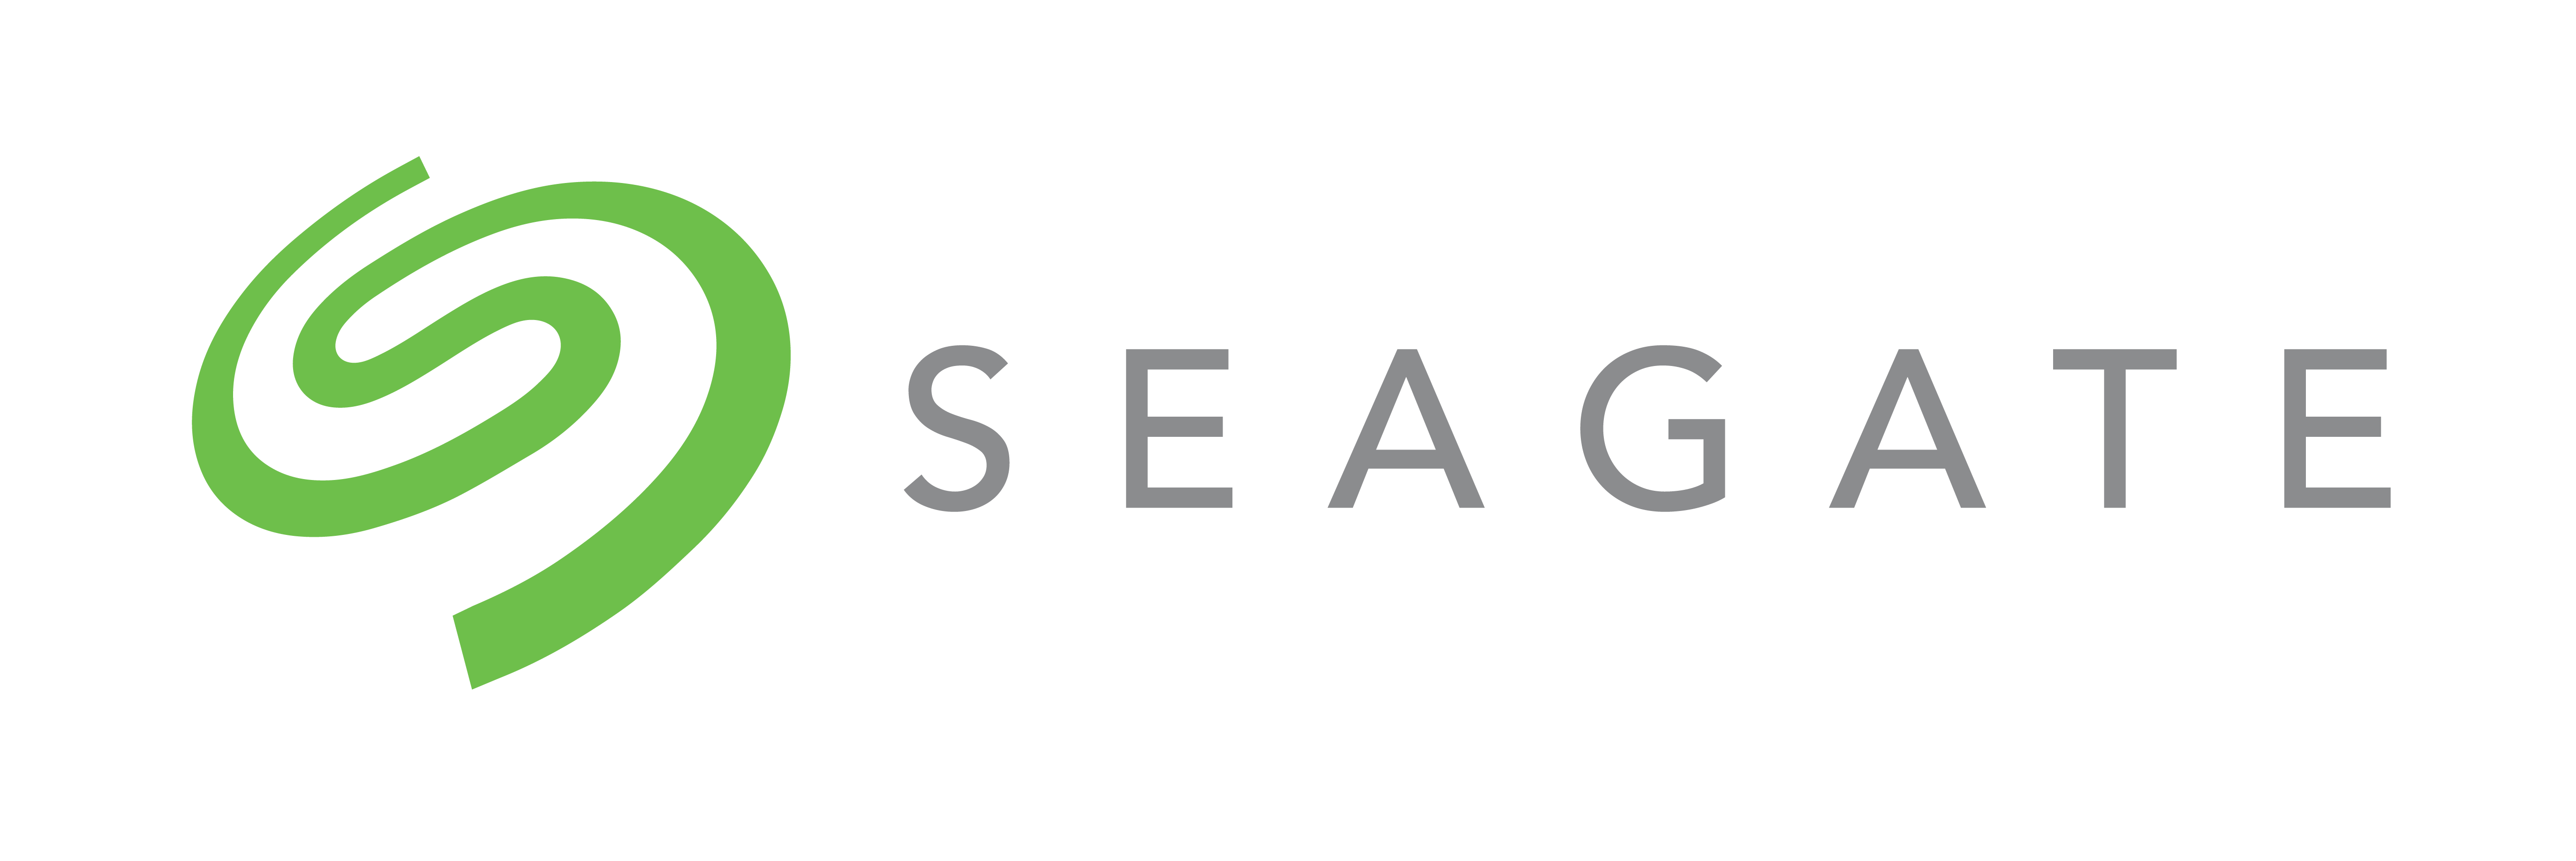 Seagatepng